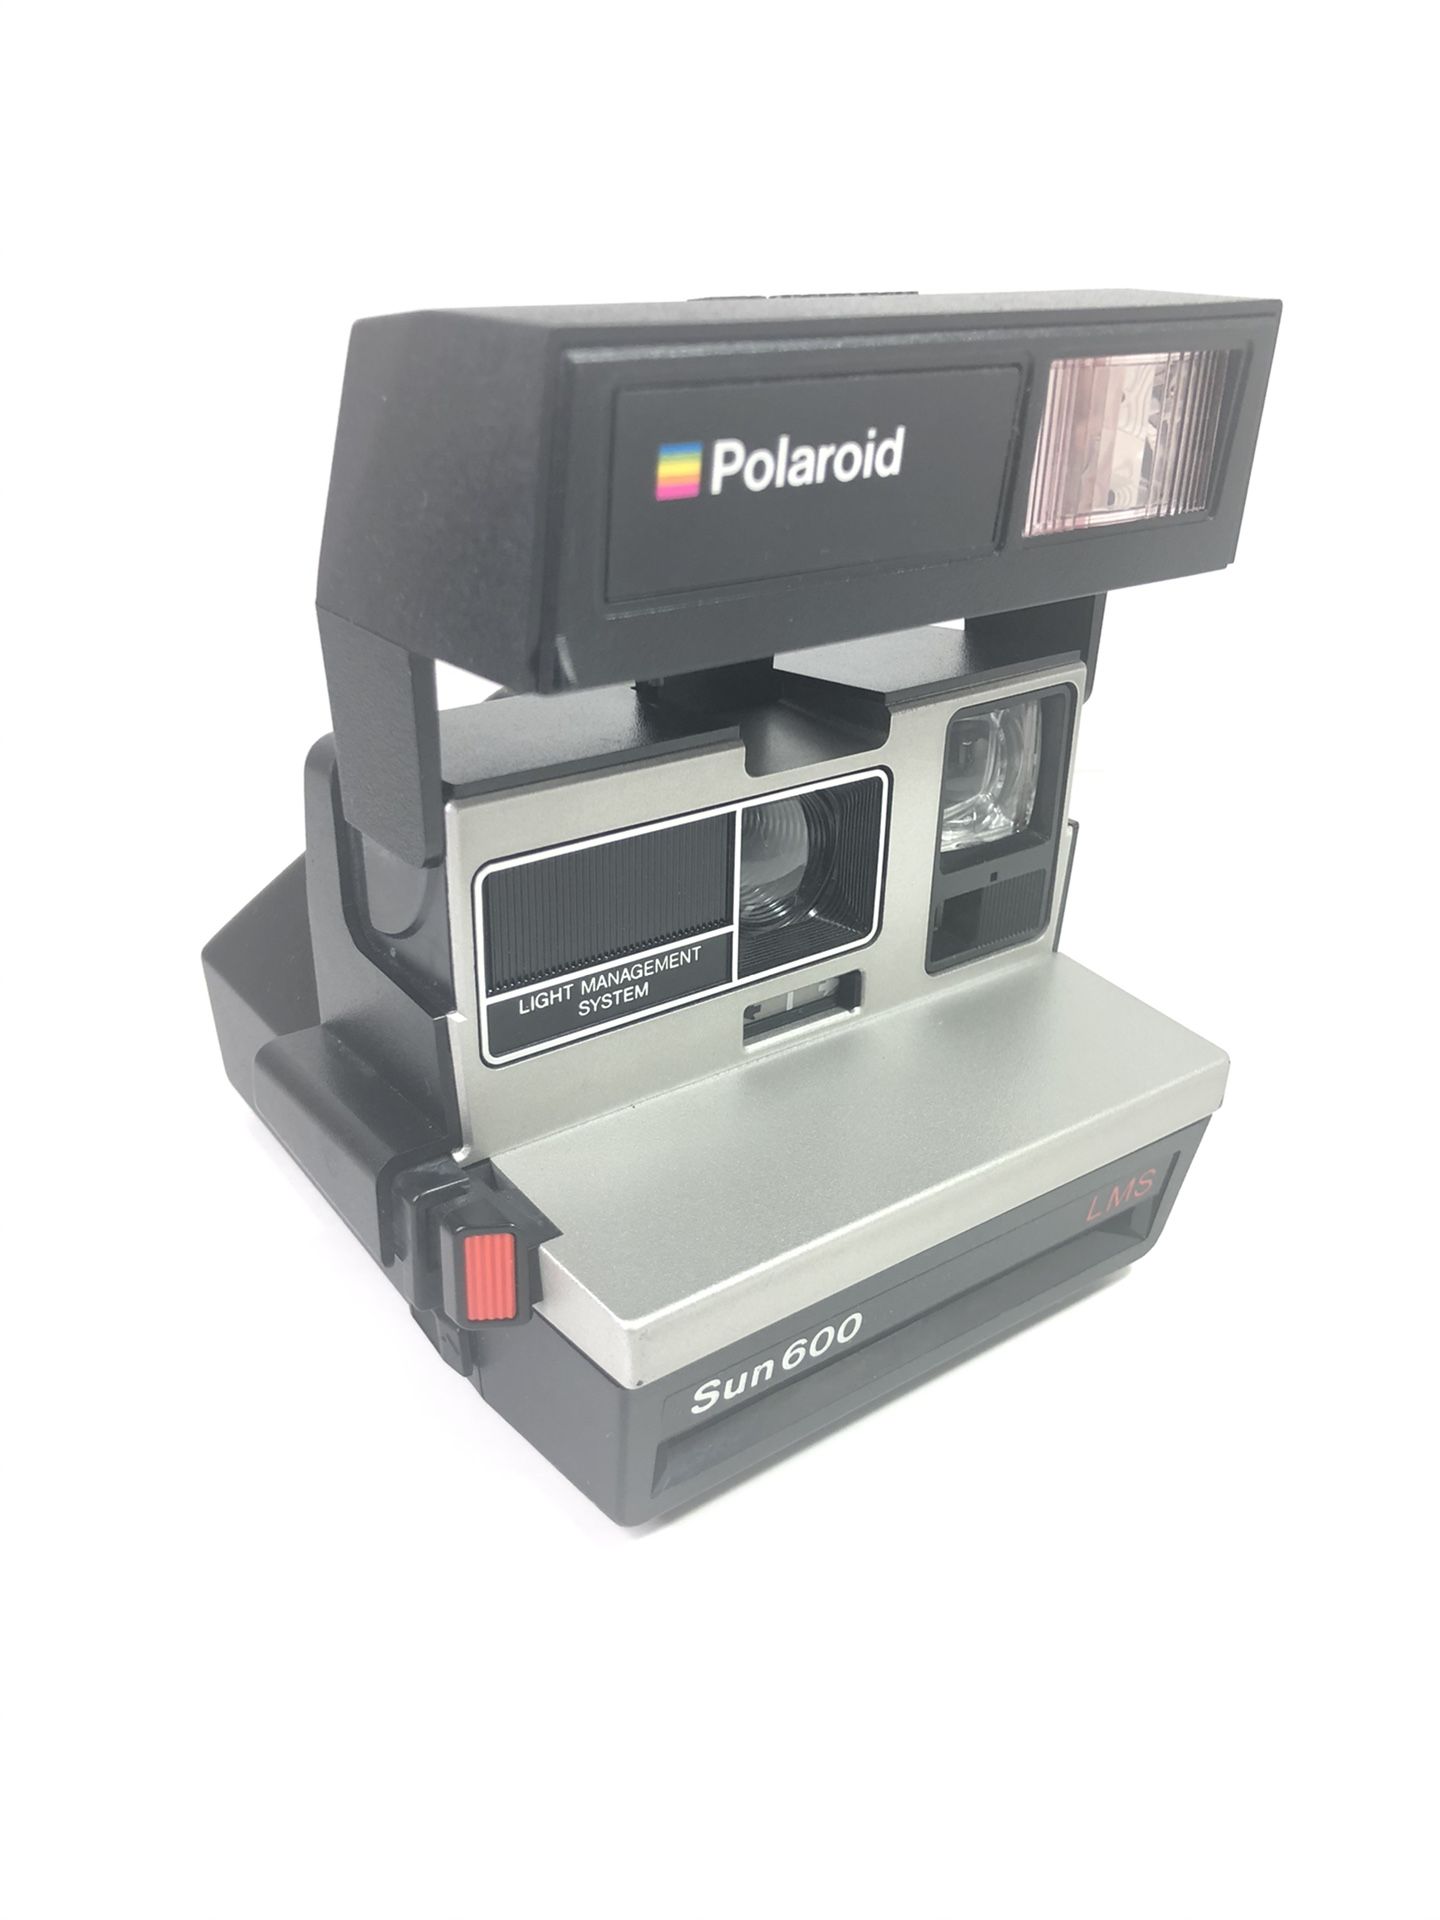 Vintage Polaroid Sun 600 LMS Instant Film Flash Camera Untested READ DESCRIPTION